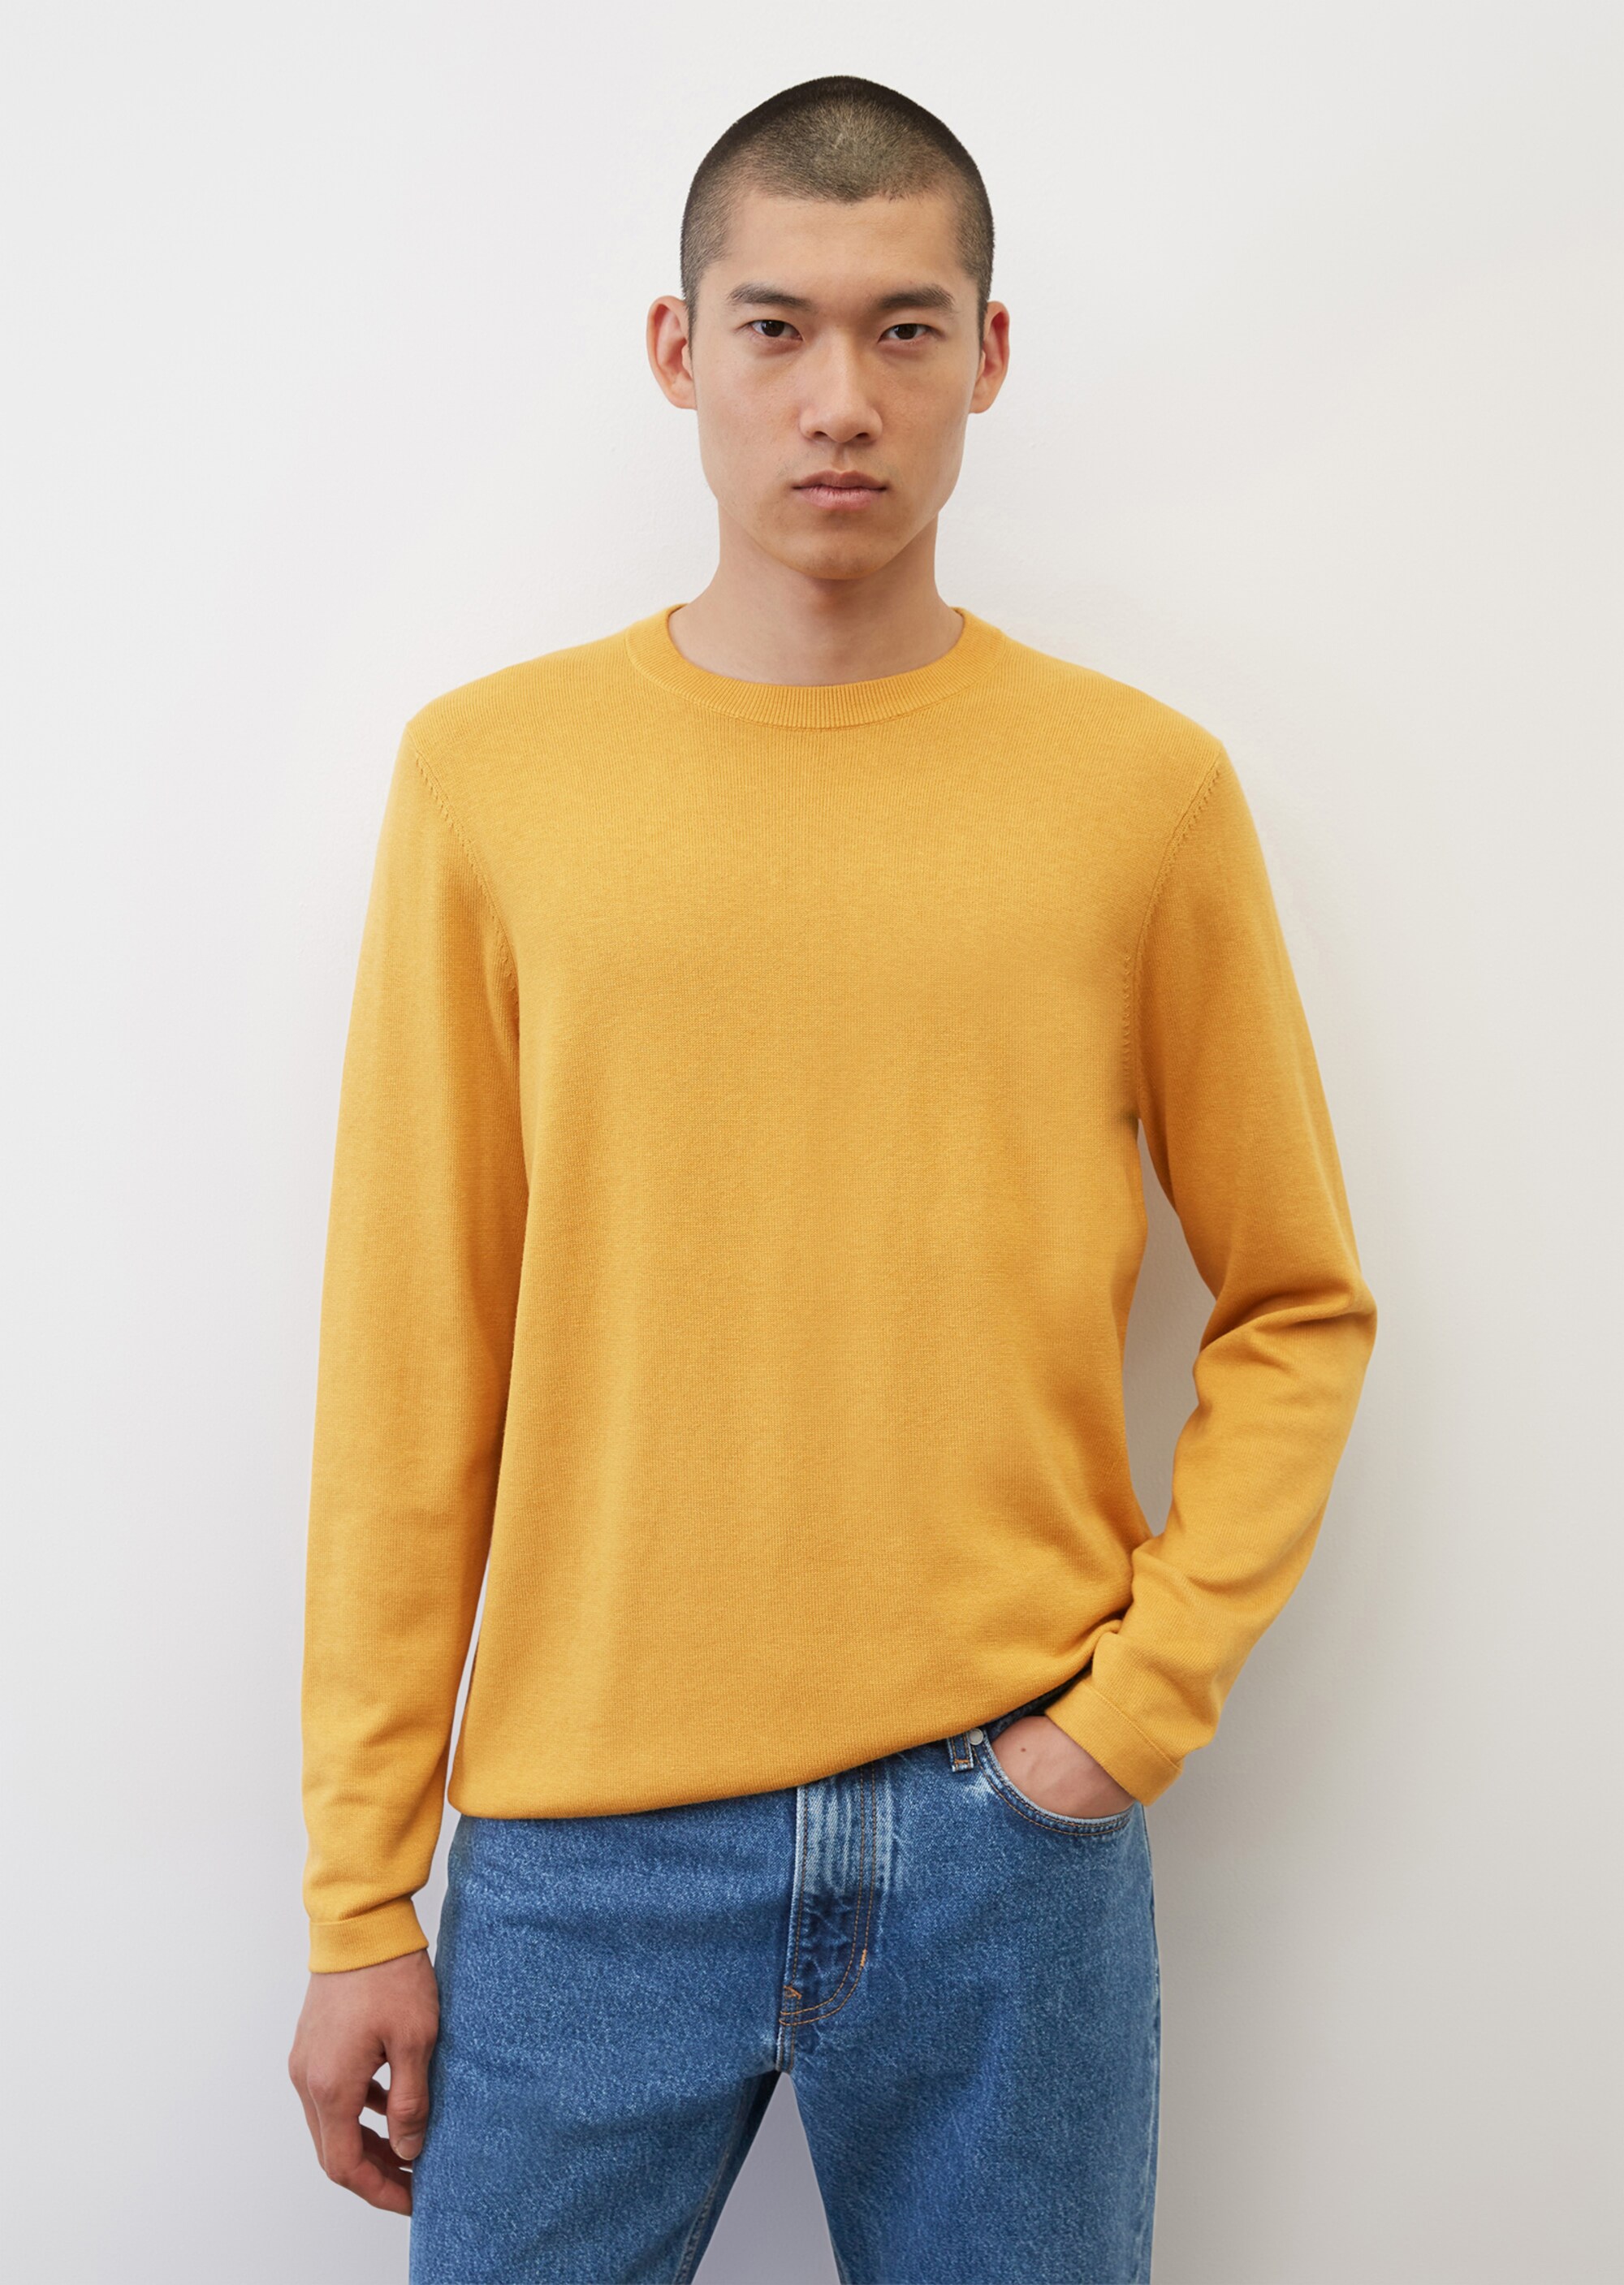 Marc O\u2019Polo Gebreide trui limoen geel casual uitstraling Mode Sweaters Gebreide truien Marc O’Polo 